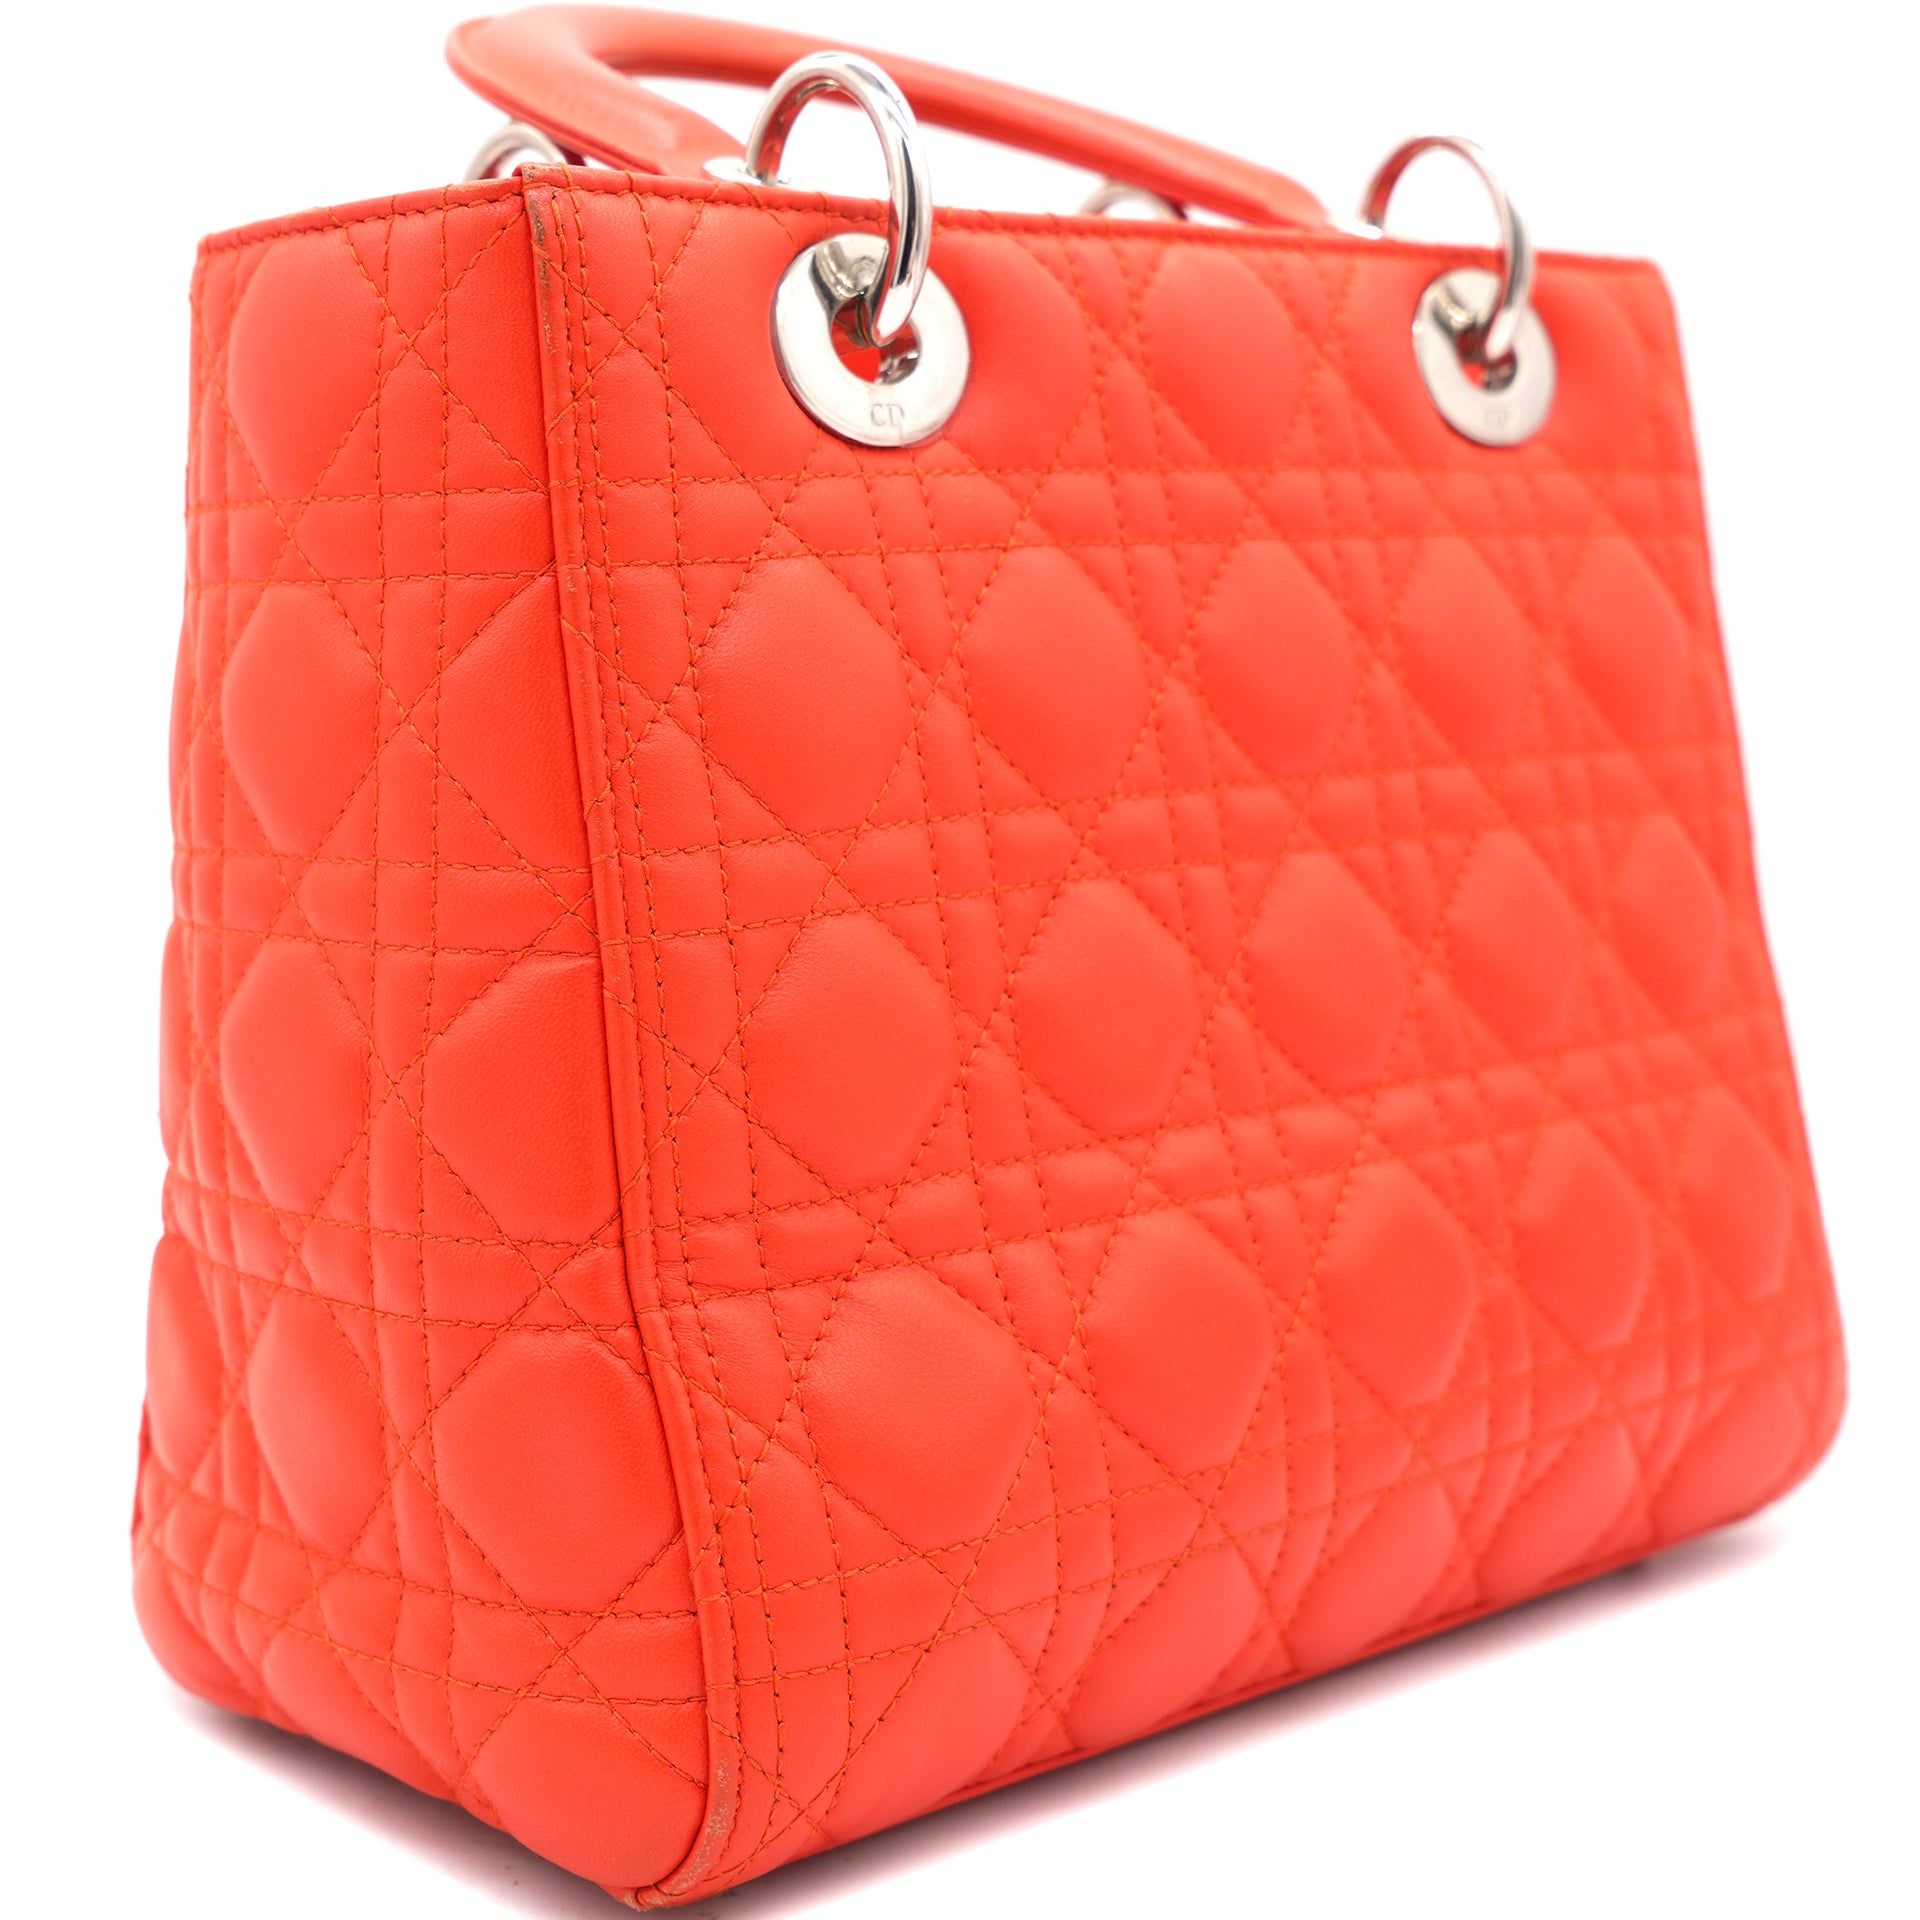 Orangey Red Cannage Leather Medium Lady Dior Tote